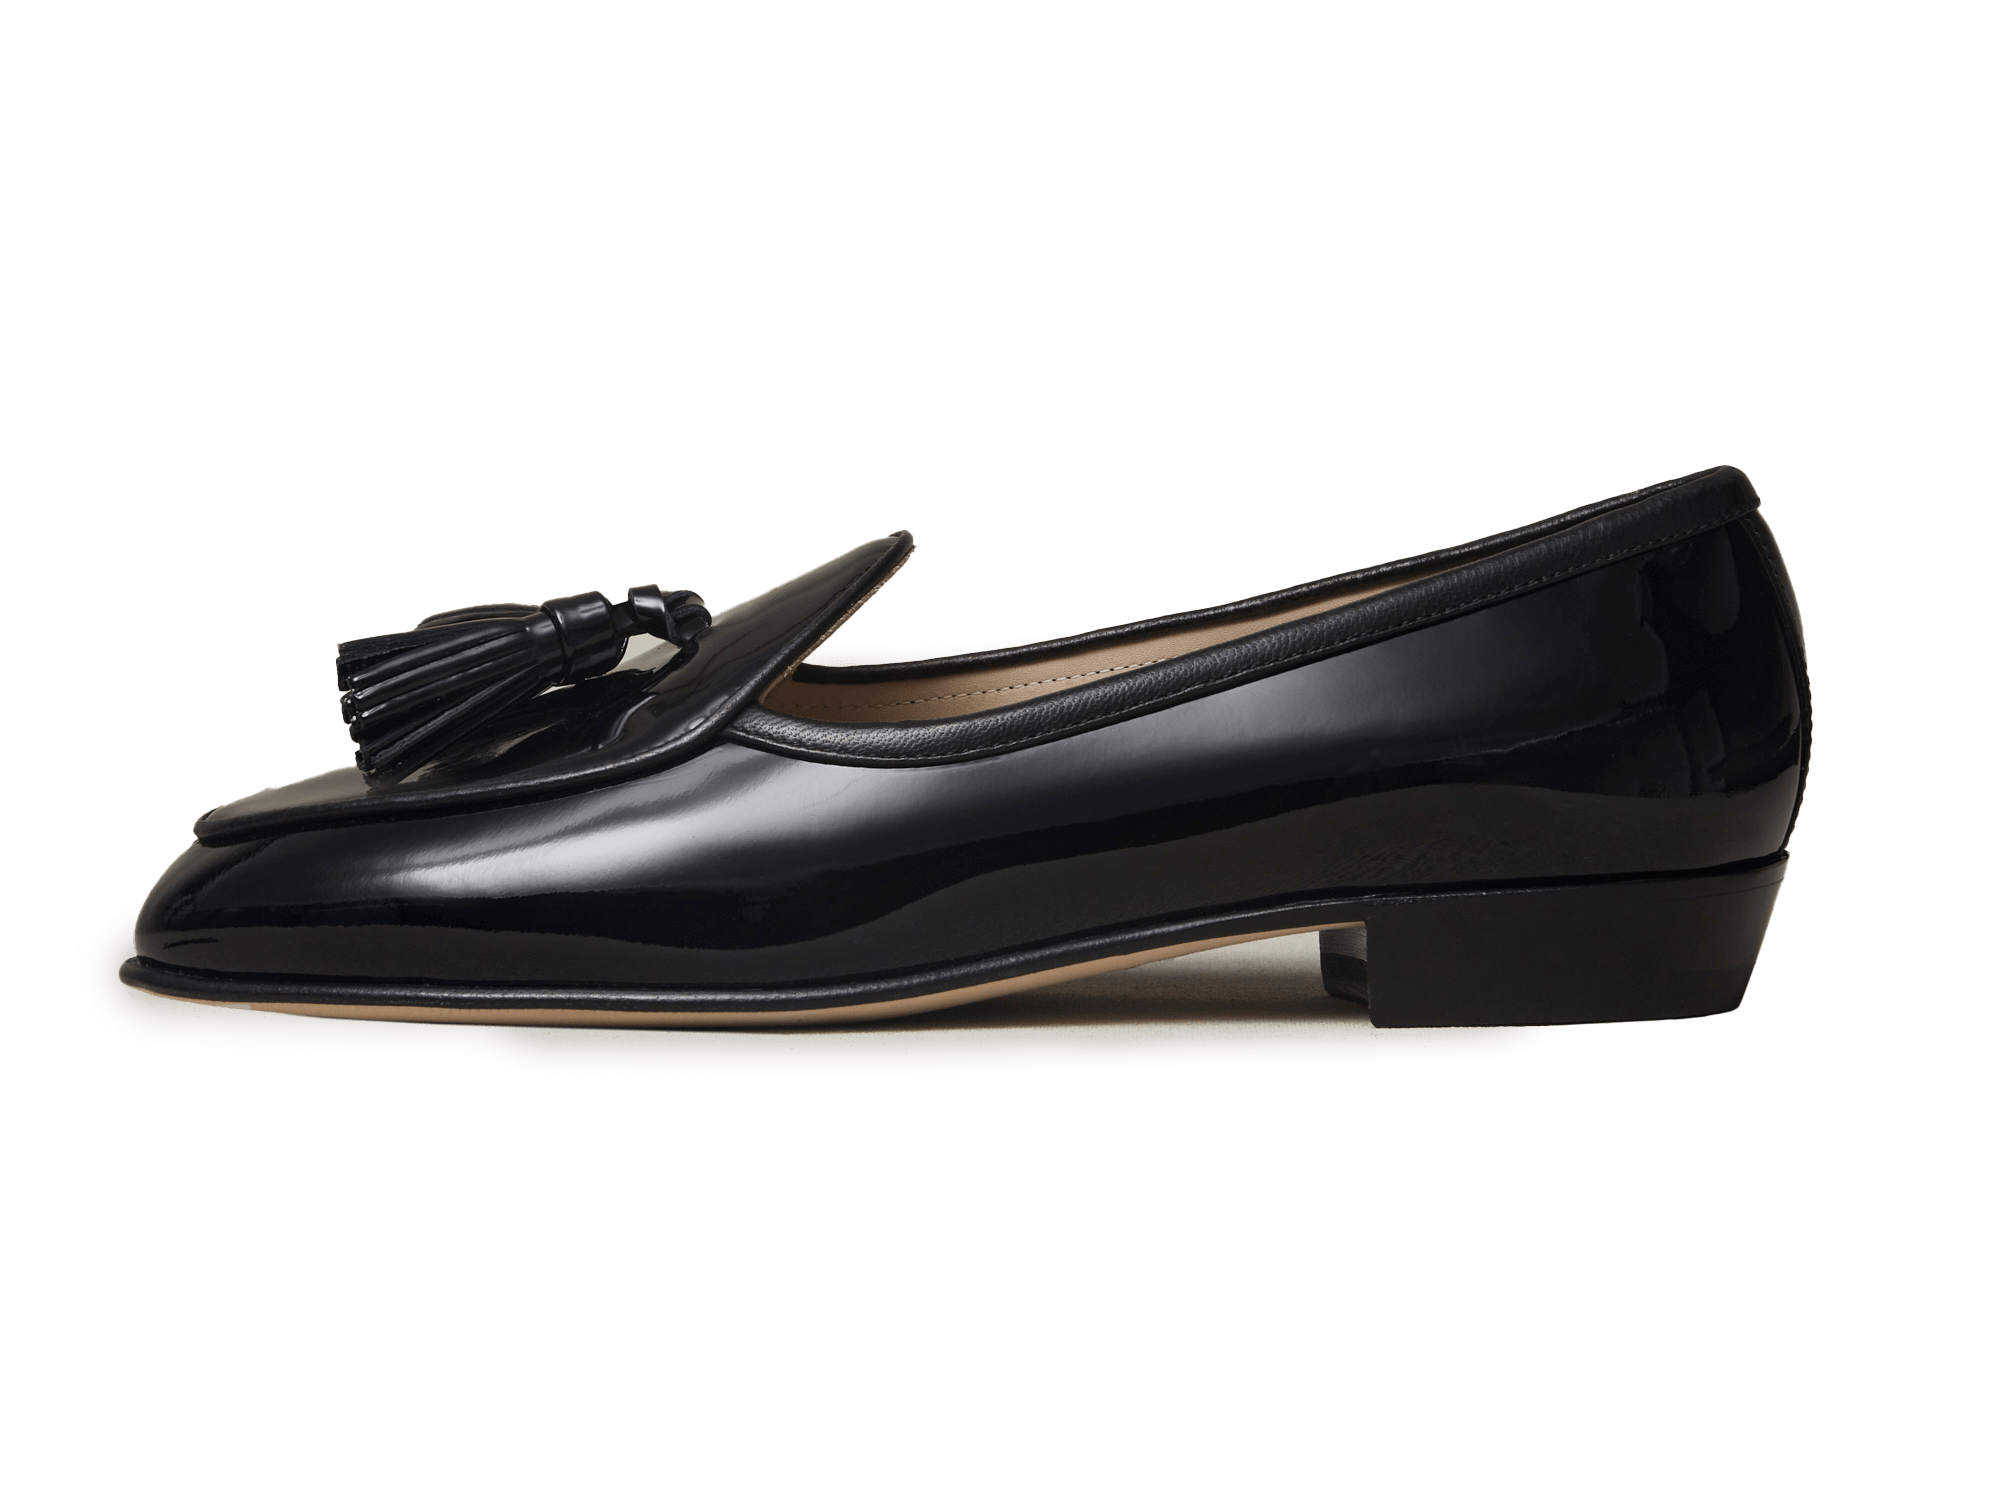 Sagan Tassel Loafers in Black Patent